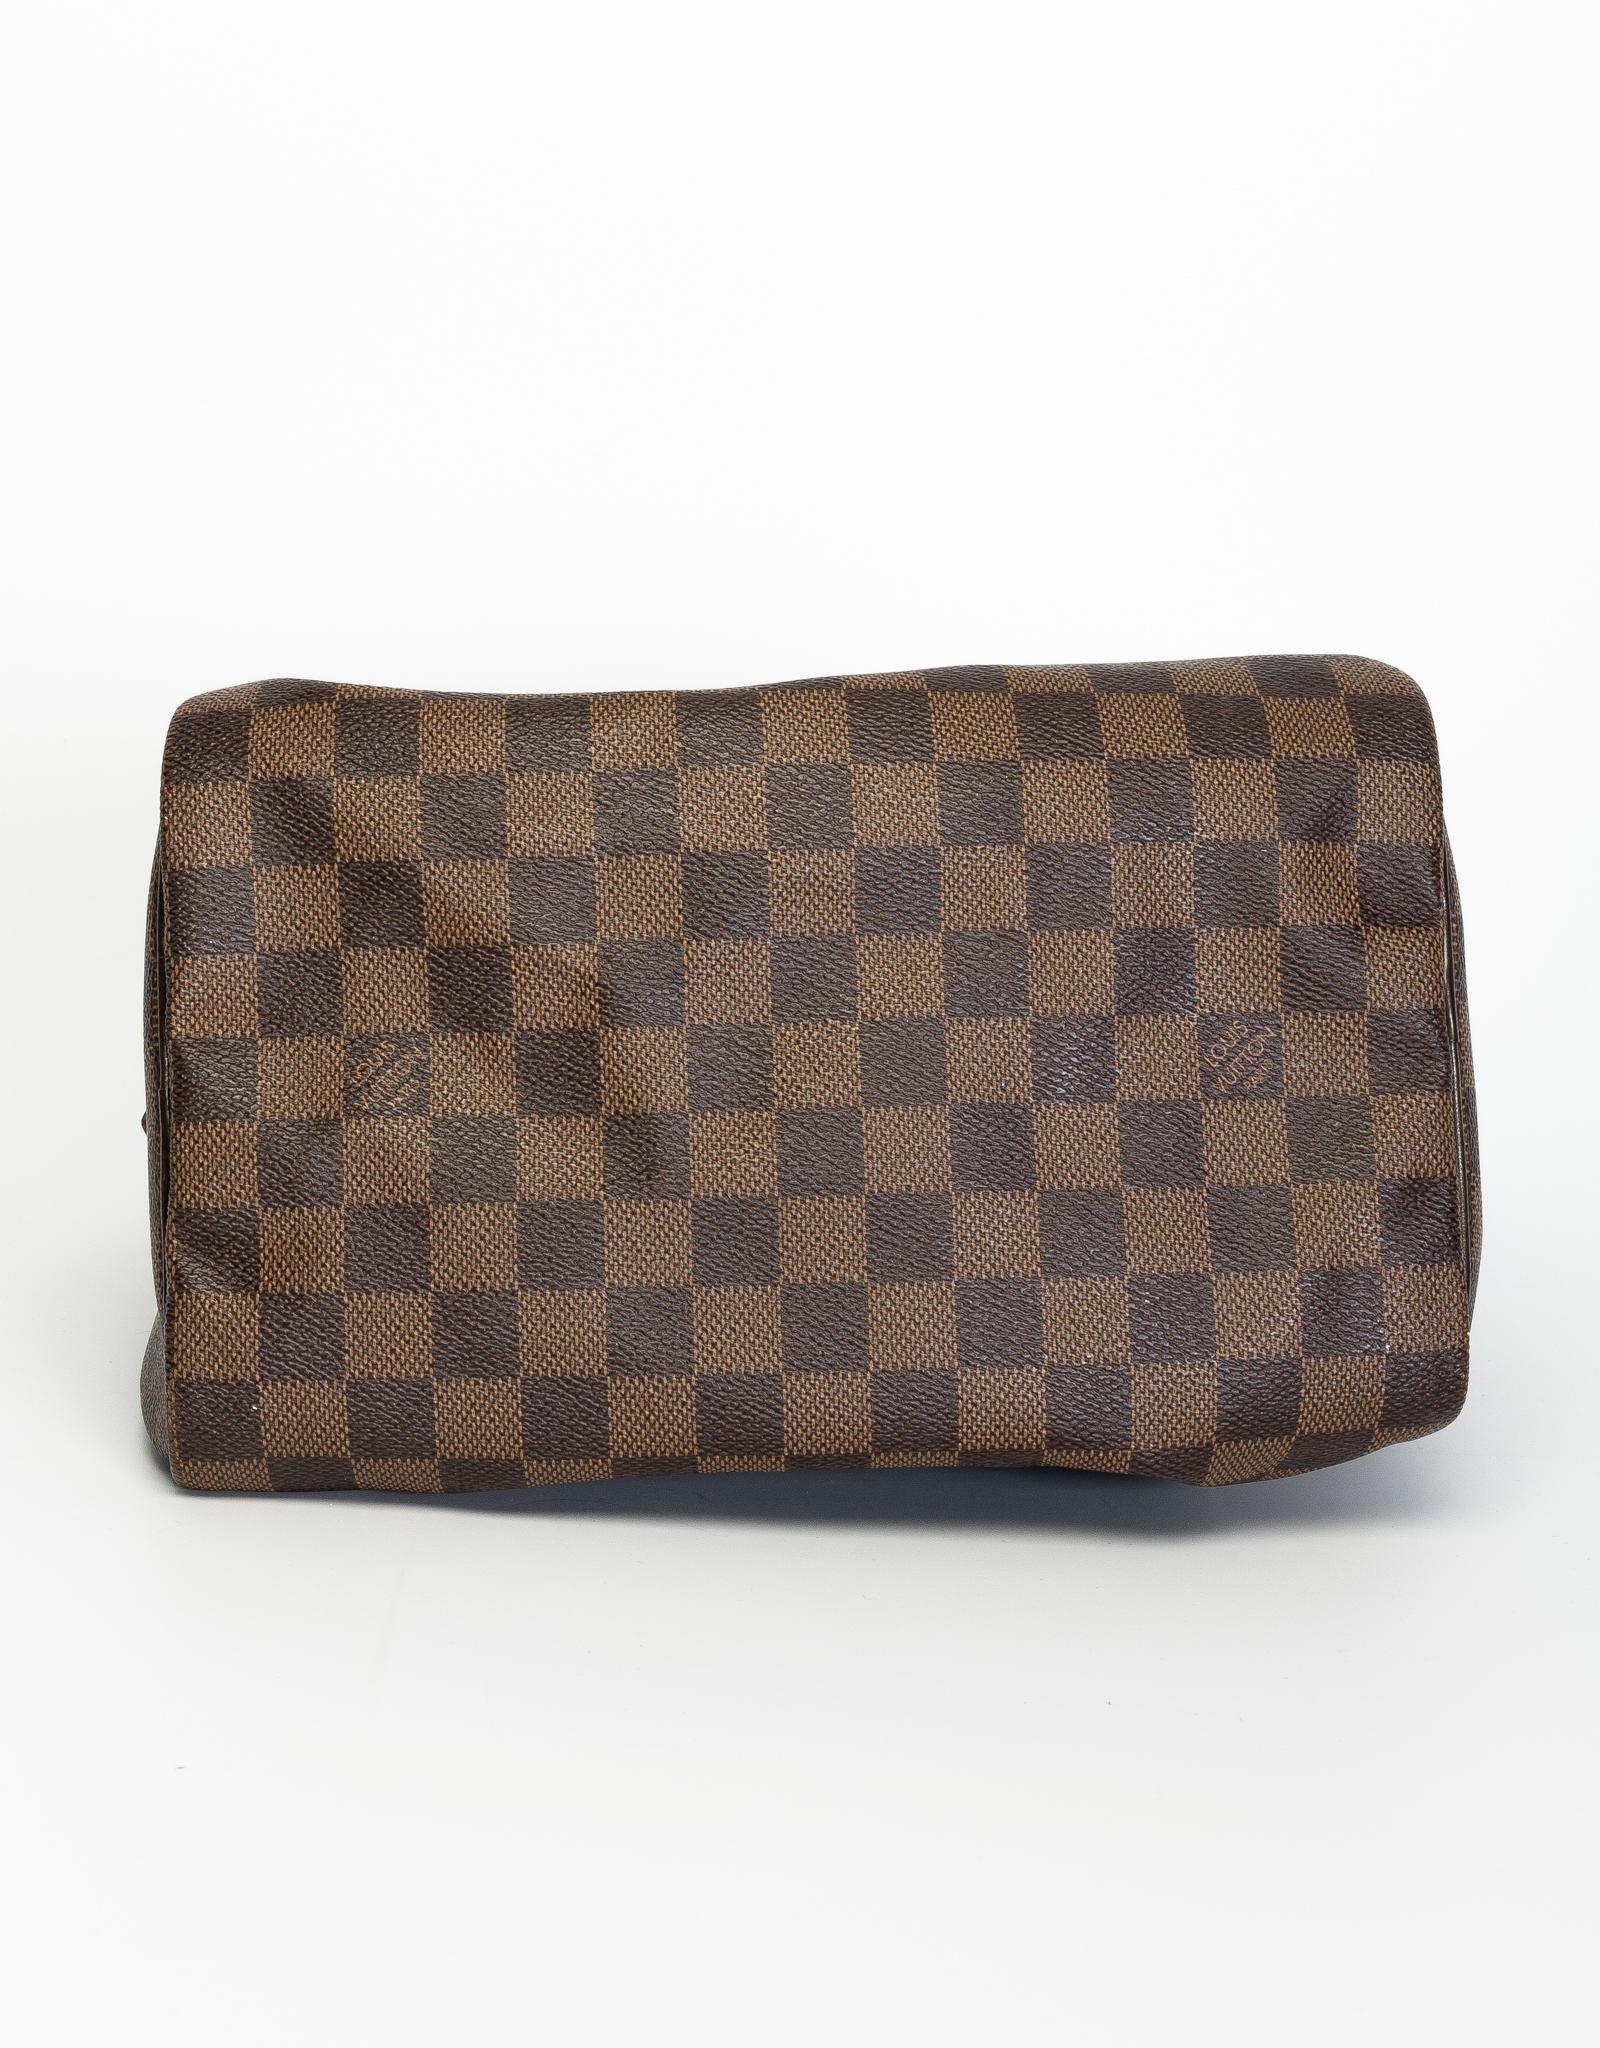 Louis Vuitton Damier Ebene Speedy 25 handbag In Good Condition In Montreal, Quebec